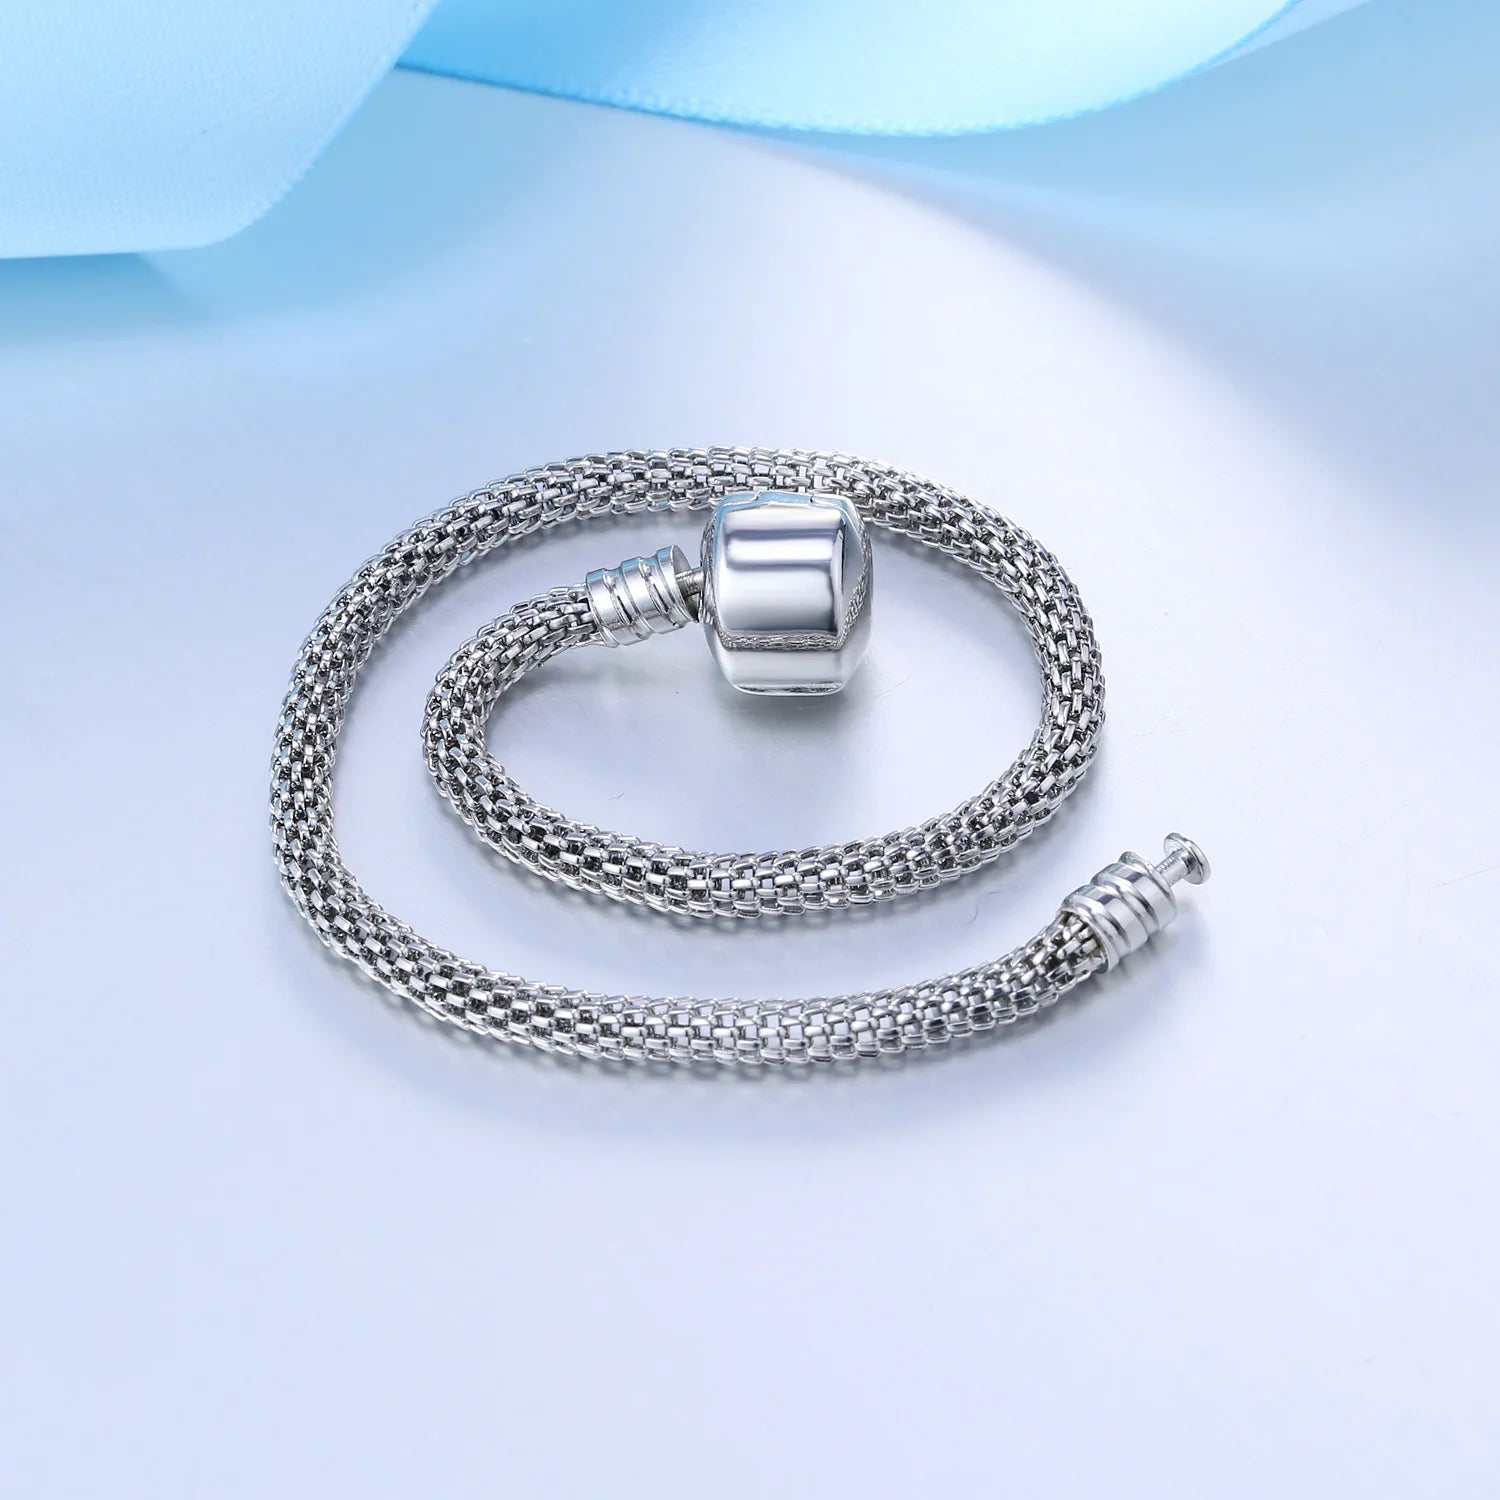 New European High Quality Original Snake Chain Classic Pandora Bracelet Bangle Trendy Jewelry for Women Girls DIY Jewelry Gift